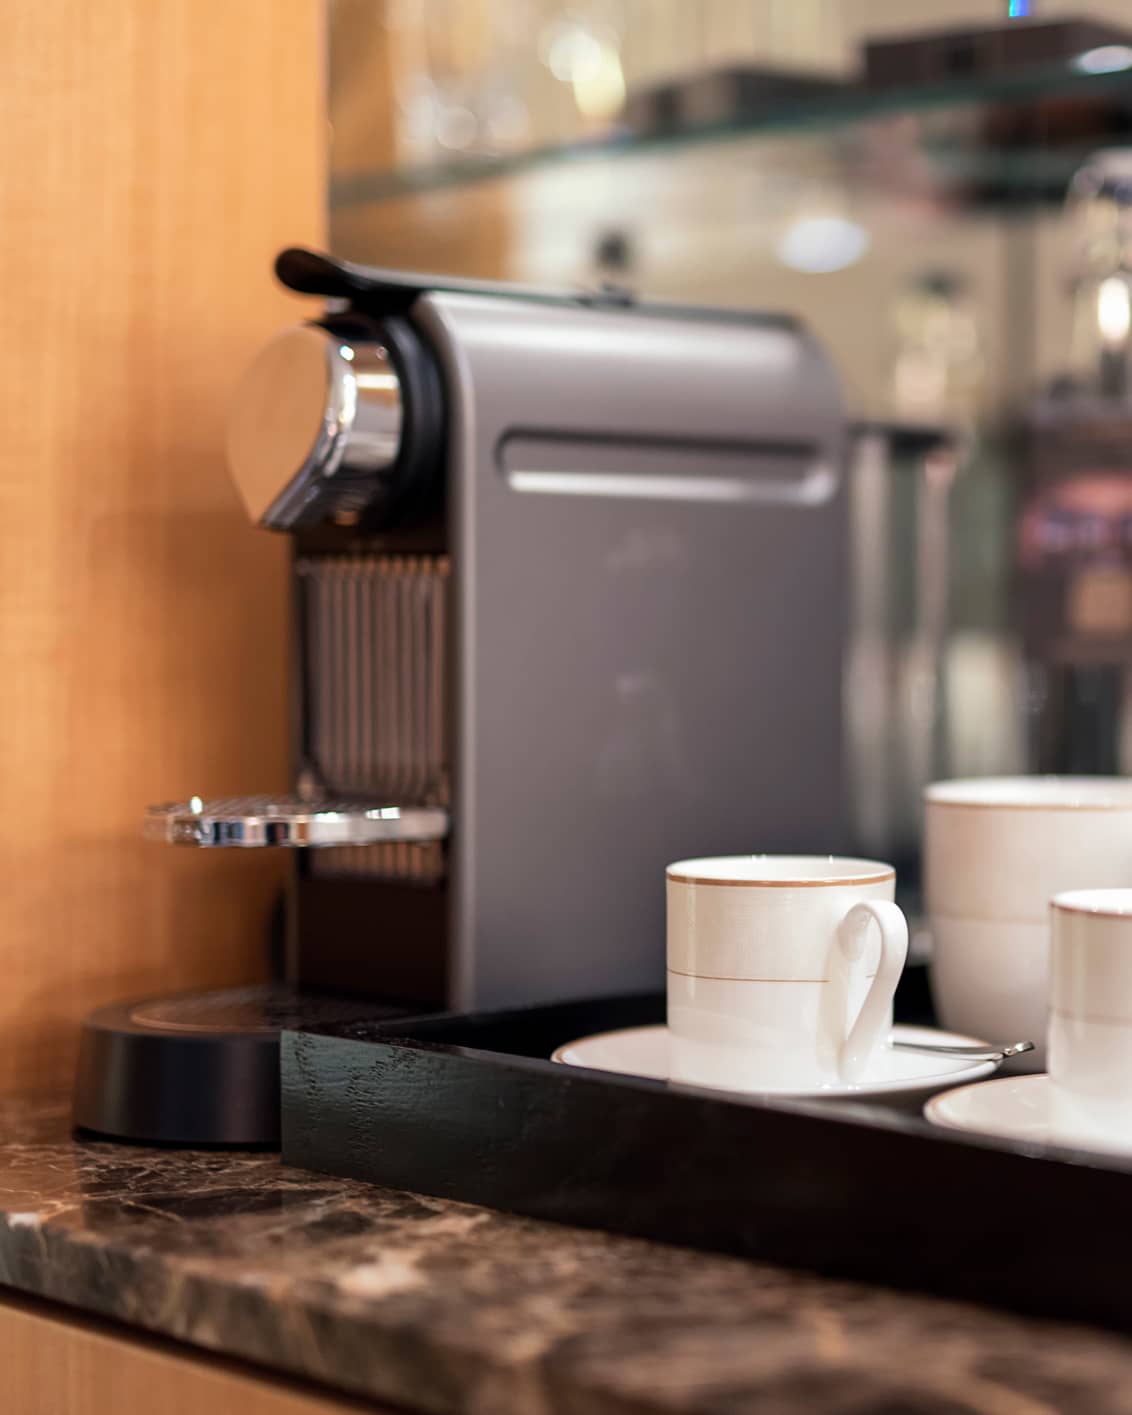 Professional Coffee Machine: Top 5 Selections – Agaro